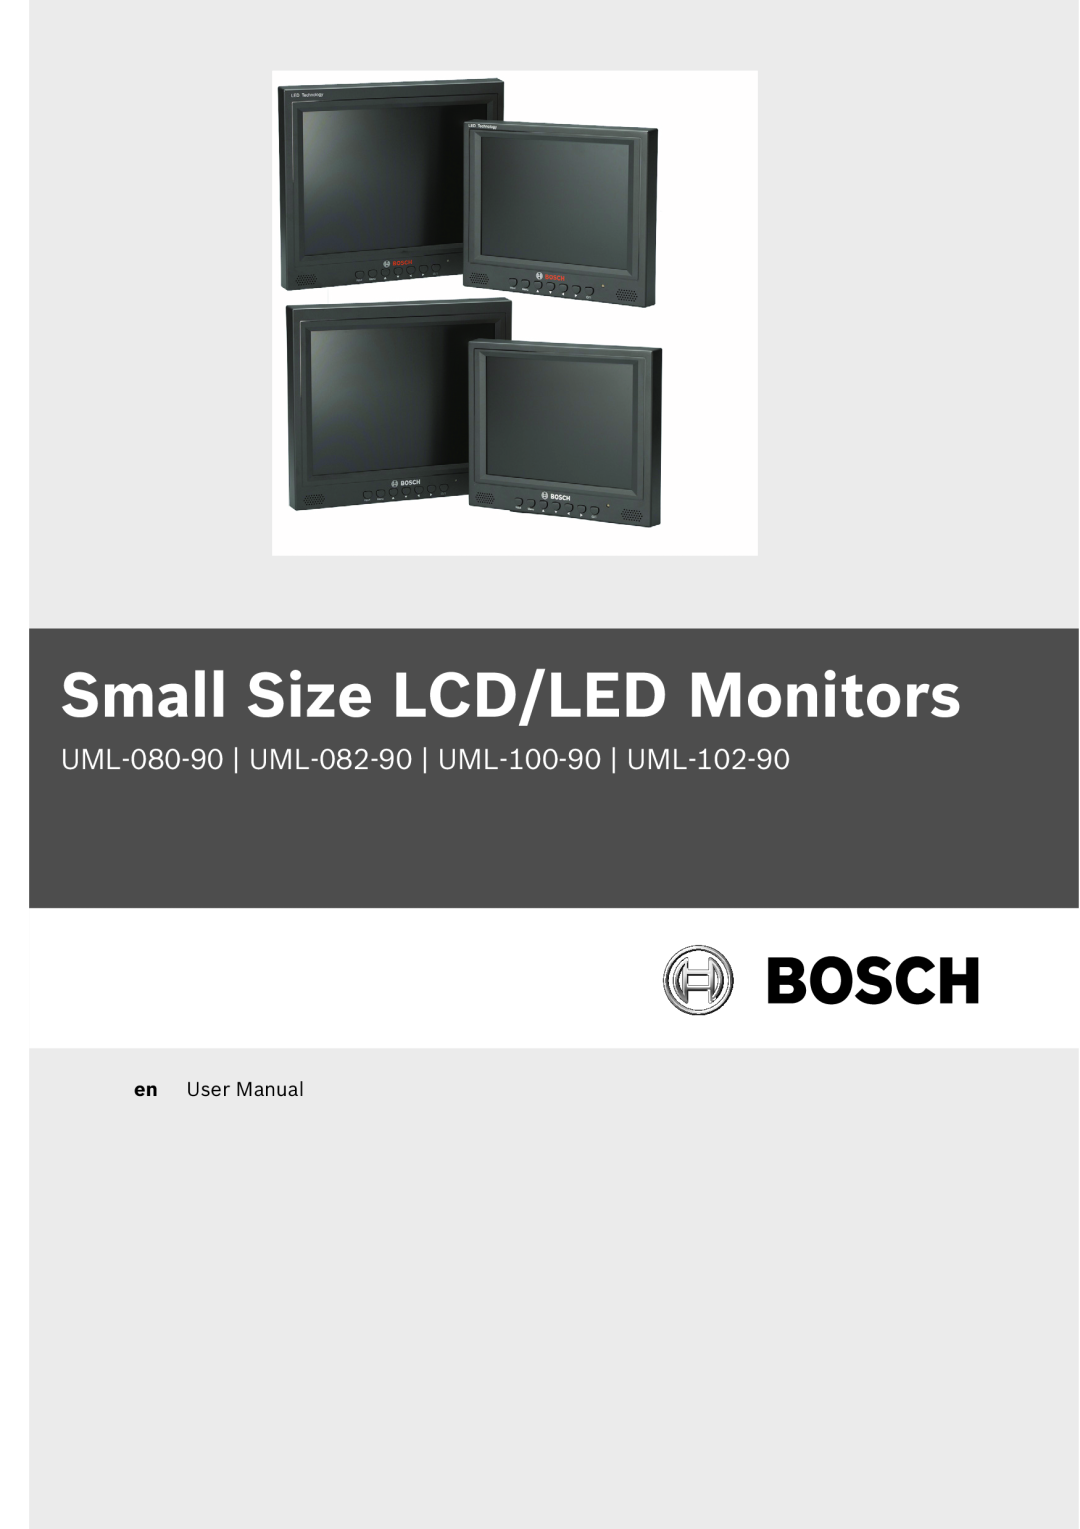 Bosch Appliances user manual Small Size LCD/LED Monitors, UML-080-90 UML-082-90 UML-100-90 UML-102-90 